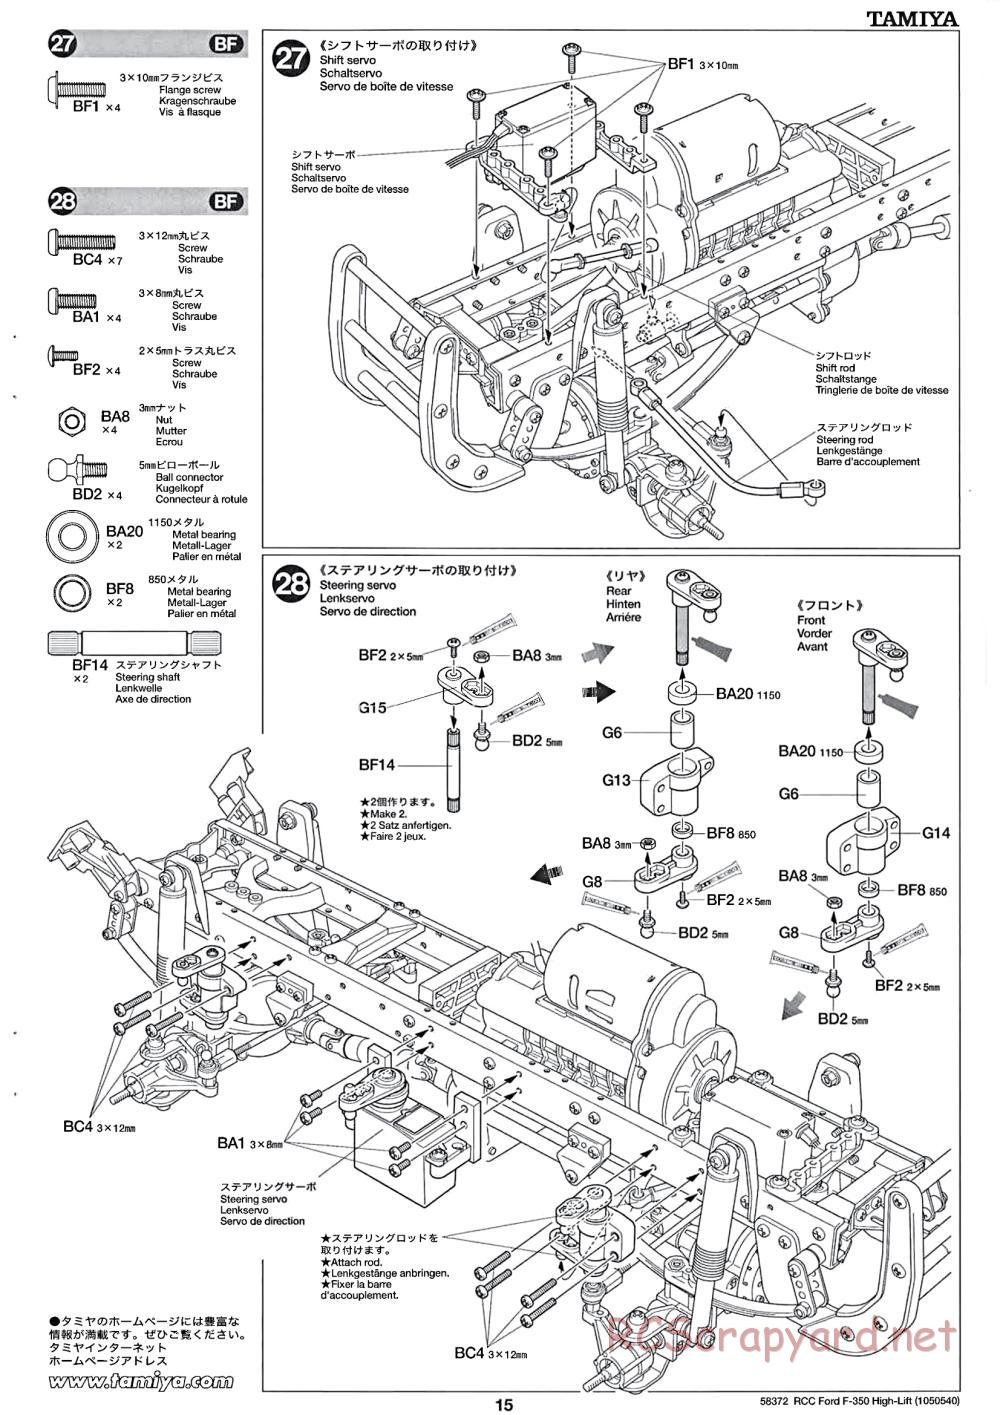 Tamiya - Ford F350 High-Lift Chassis - Manual - Page 15